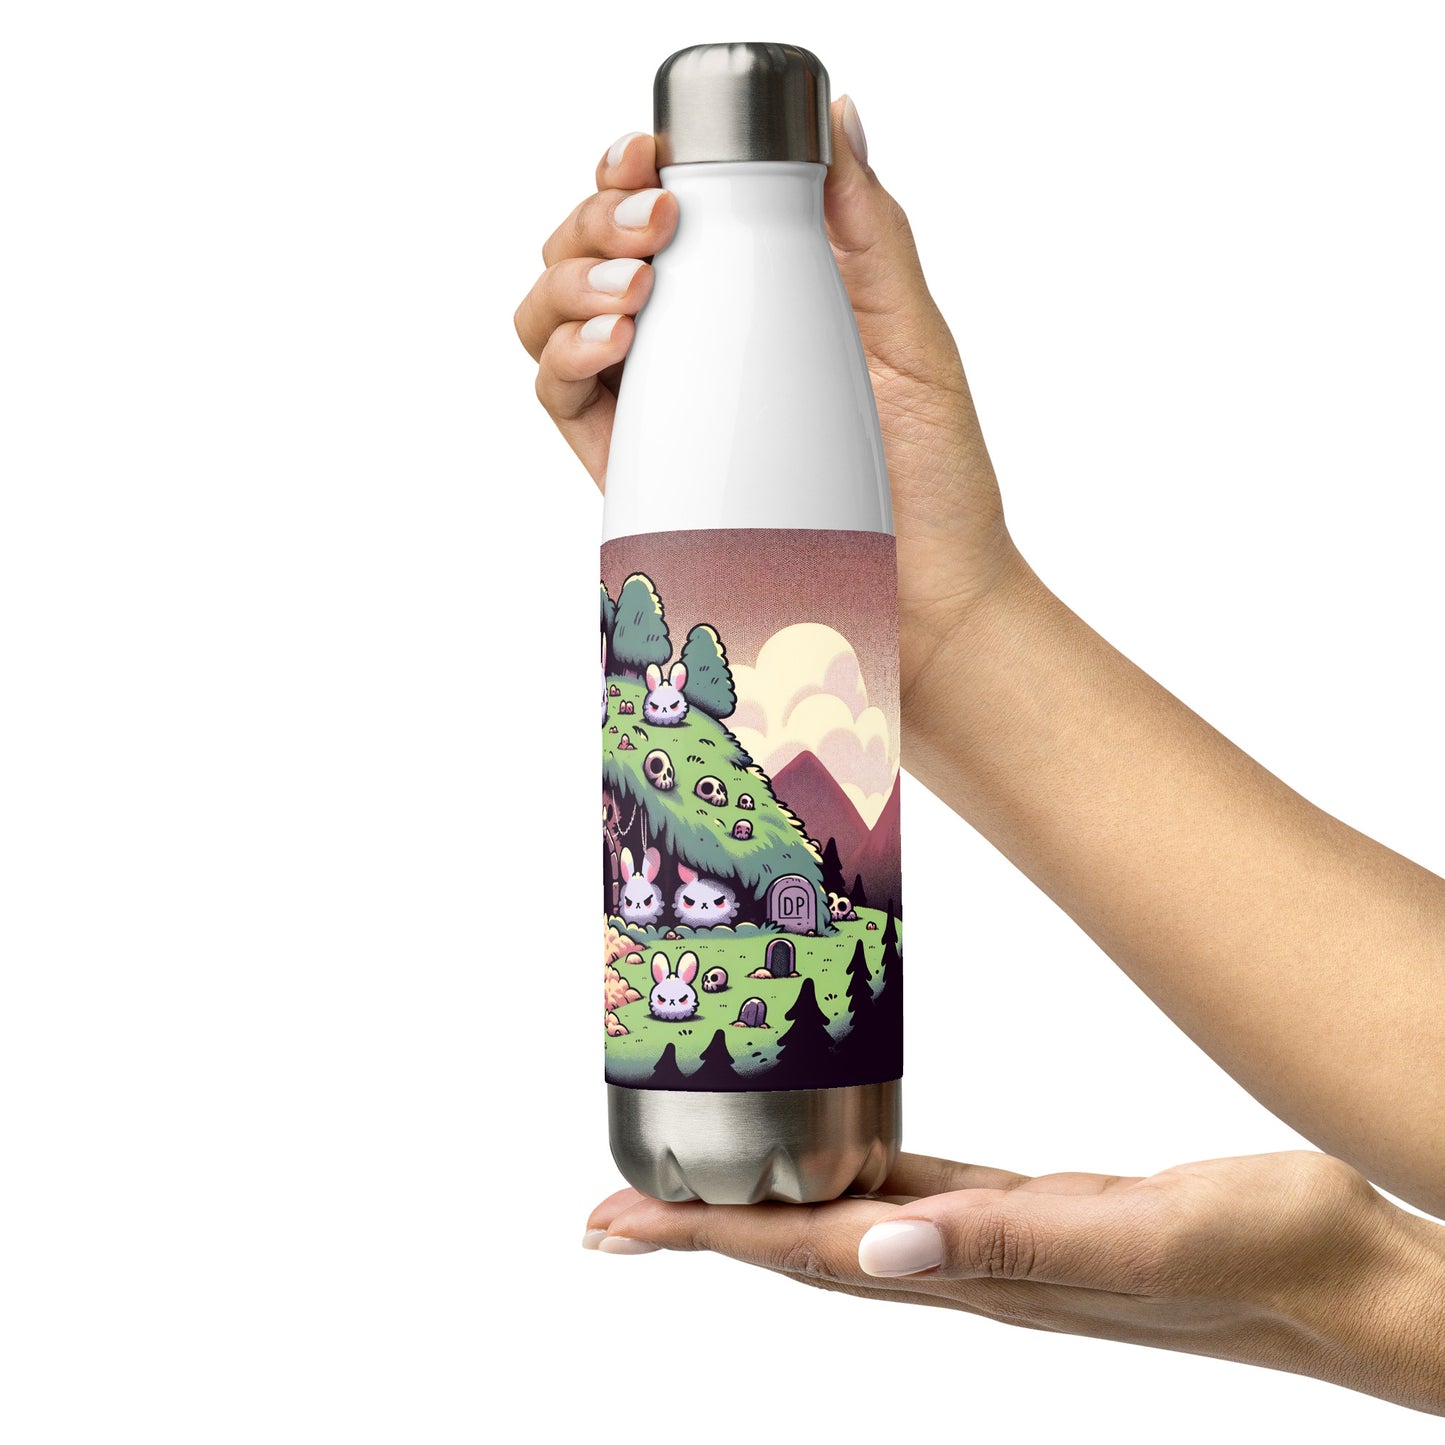 Task Slayerz - Stainless steel water bottle